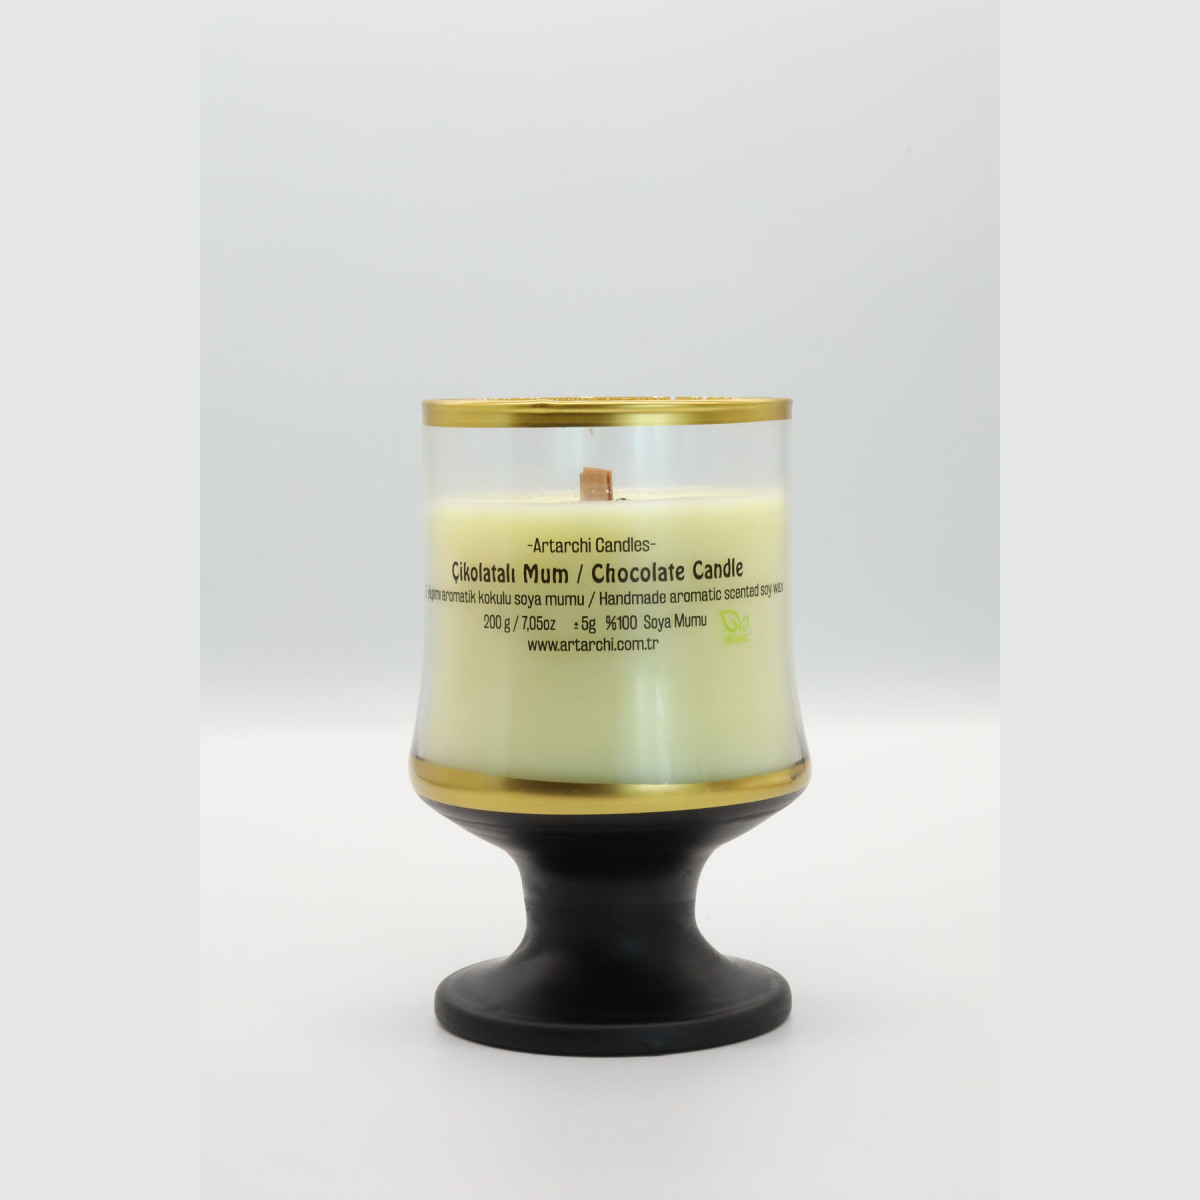 Kahveli Mum & Coffee Candle / Çift Bambu Fitil 200Gr Aromatik Kokulu %100 Doğal Soya Mumu